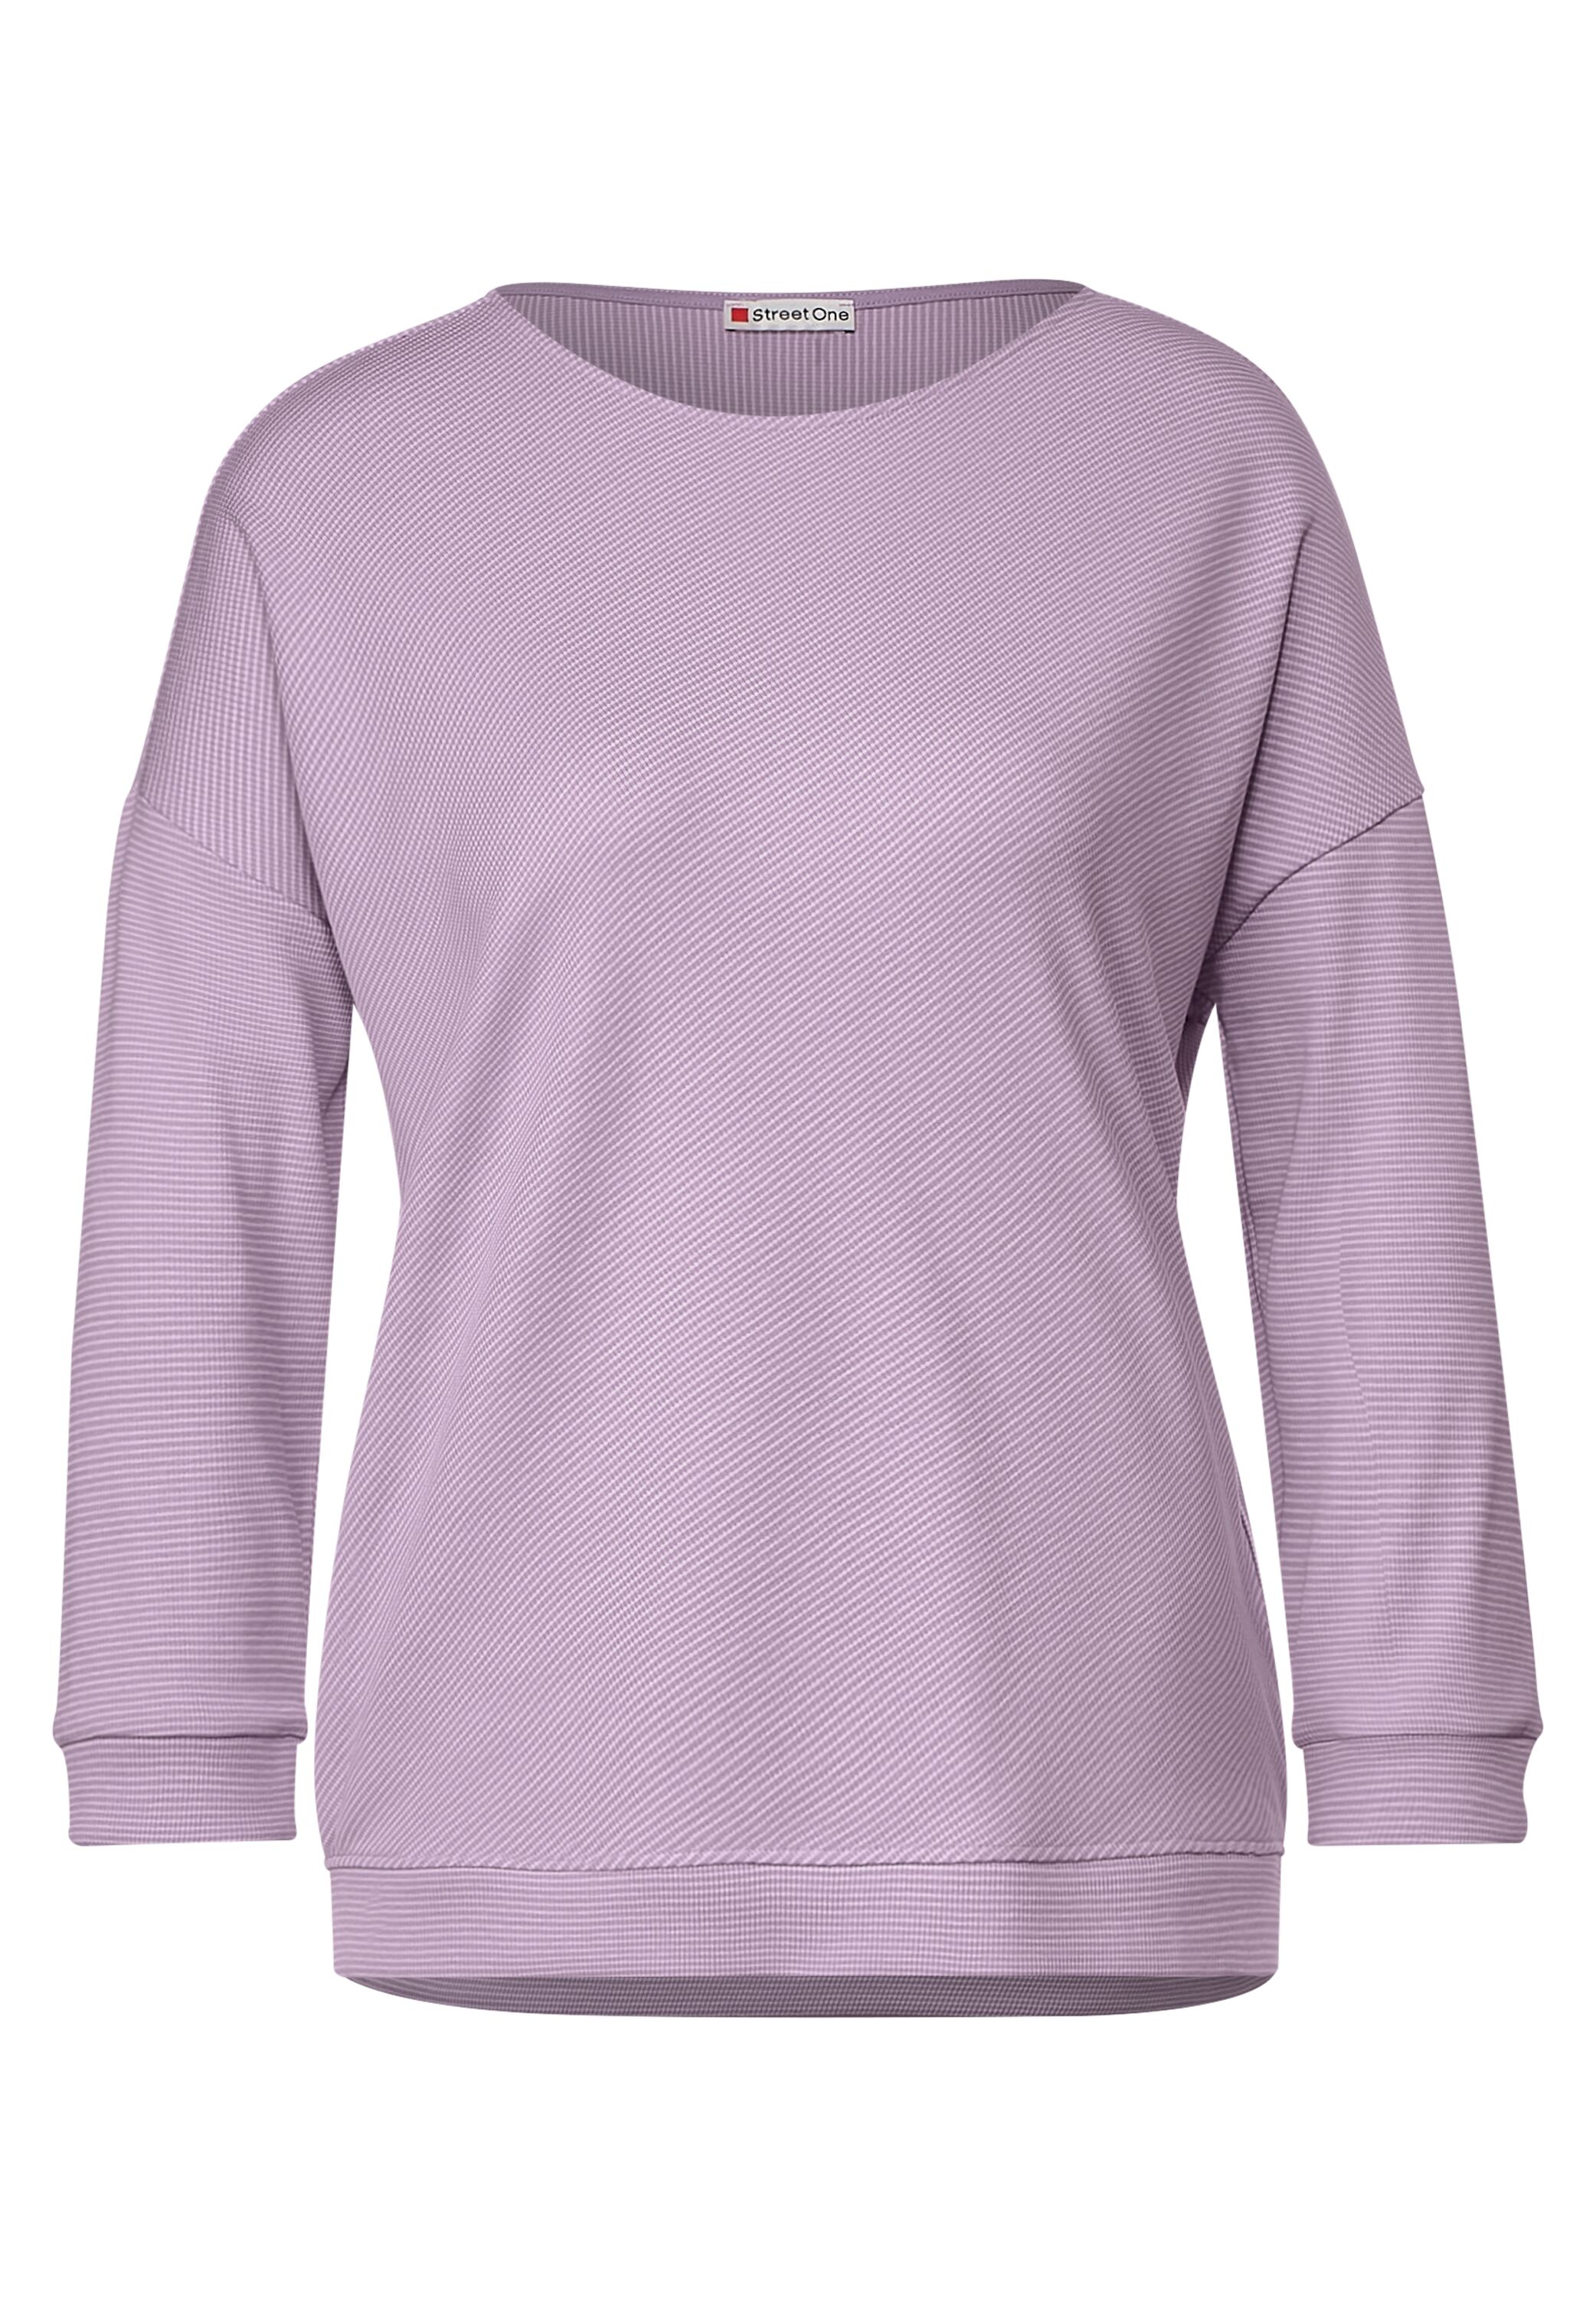 Street One Streifenshirt in Soft im Pure Lilac SALE A320427-25289 Mode reduziert - CONCEPT